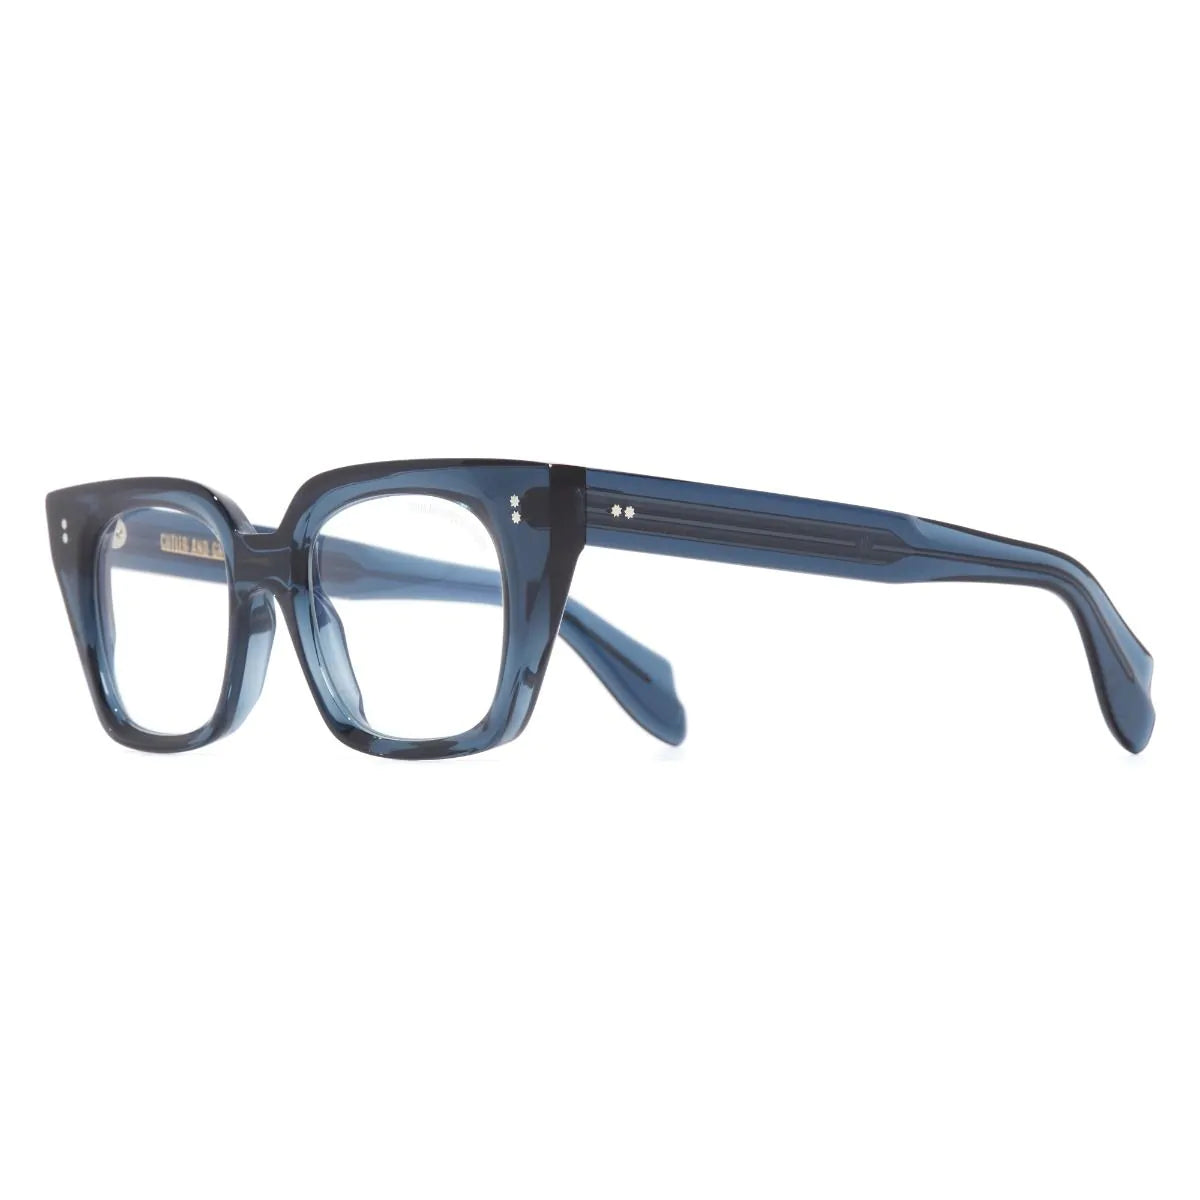 1411 Cat Eye Optical Glasses - Deep Blue by Cutler and Gross